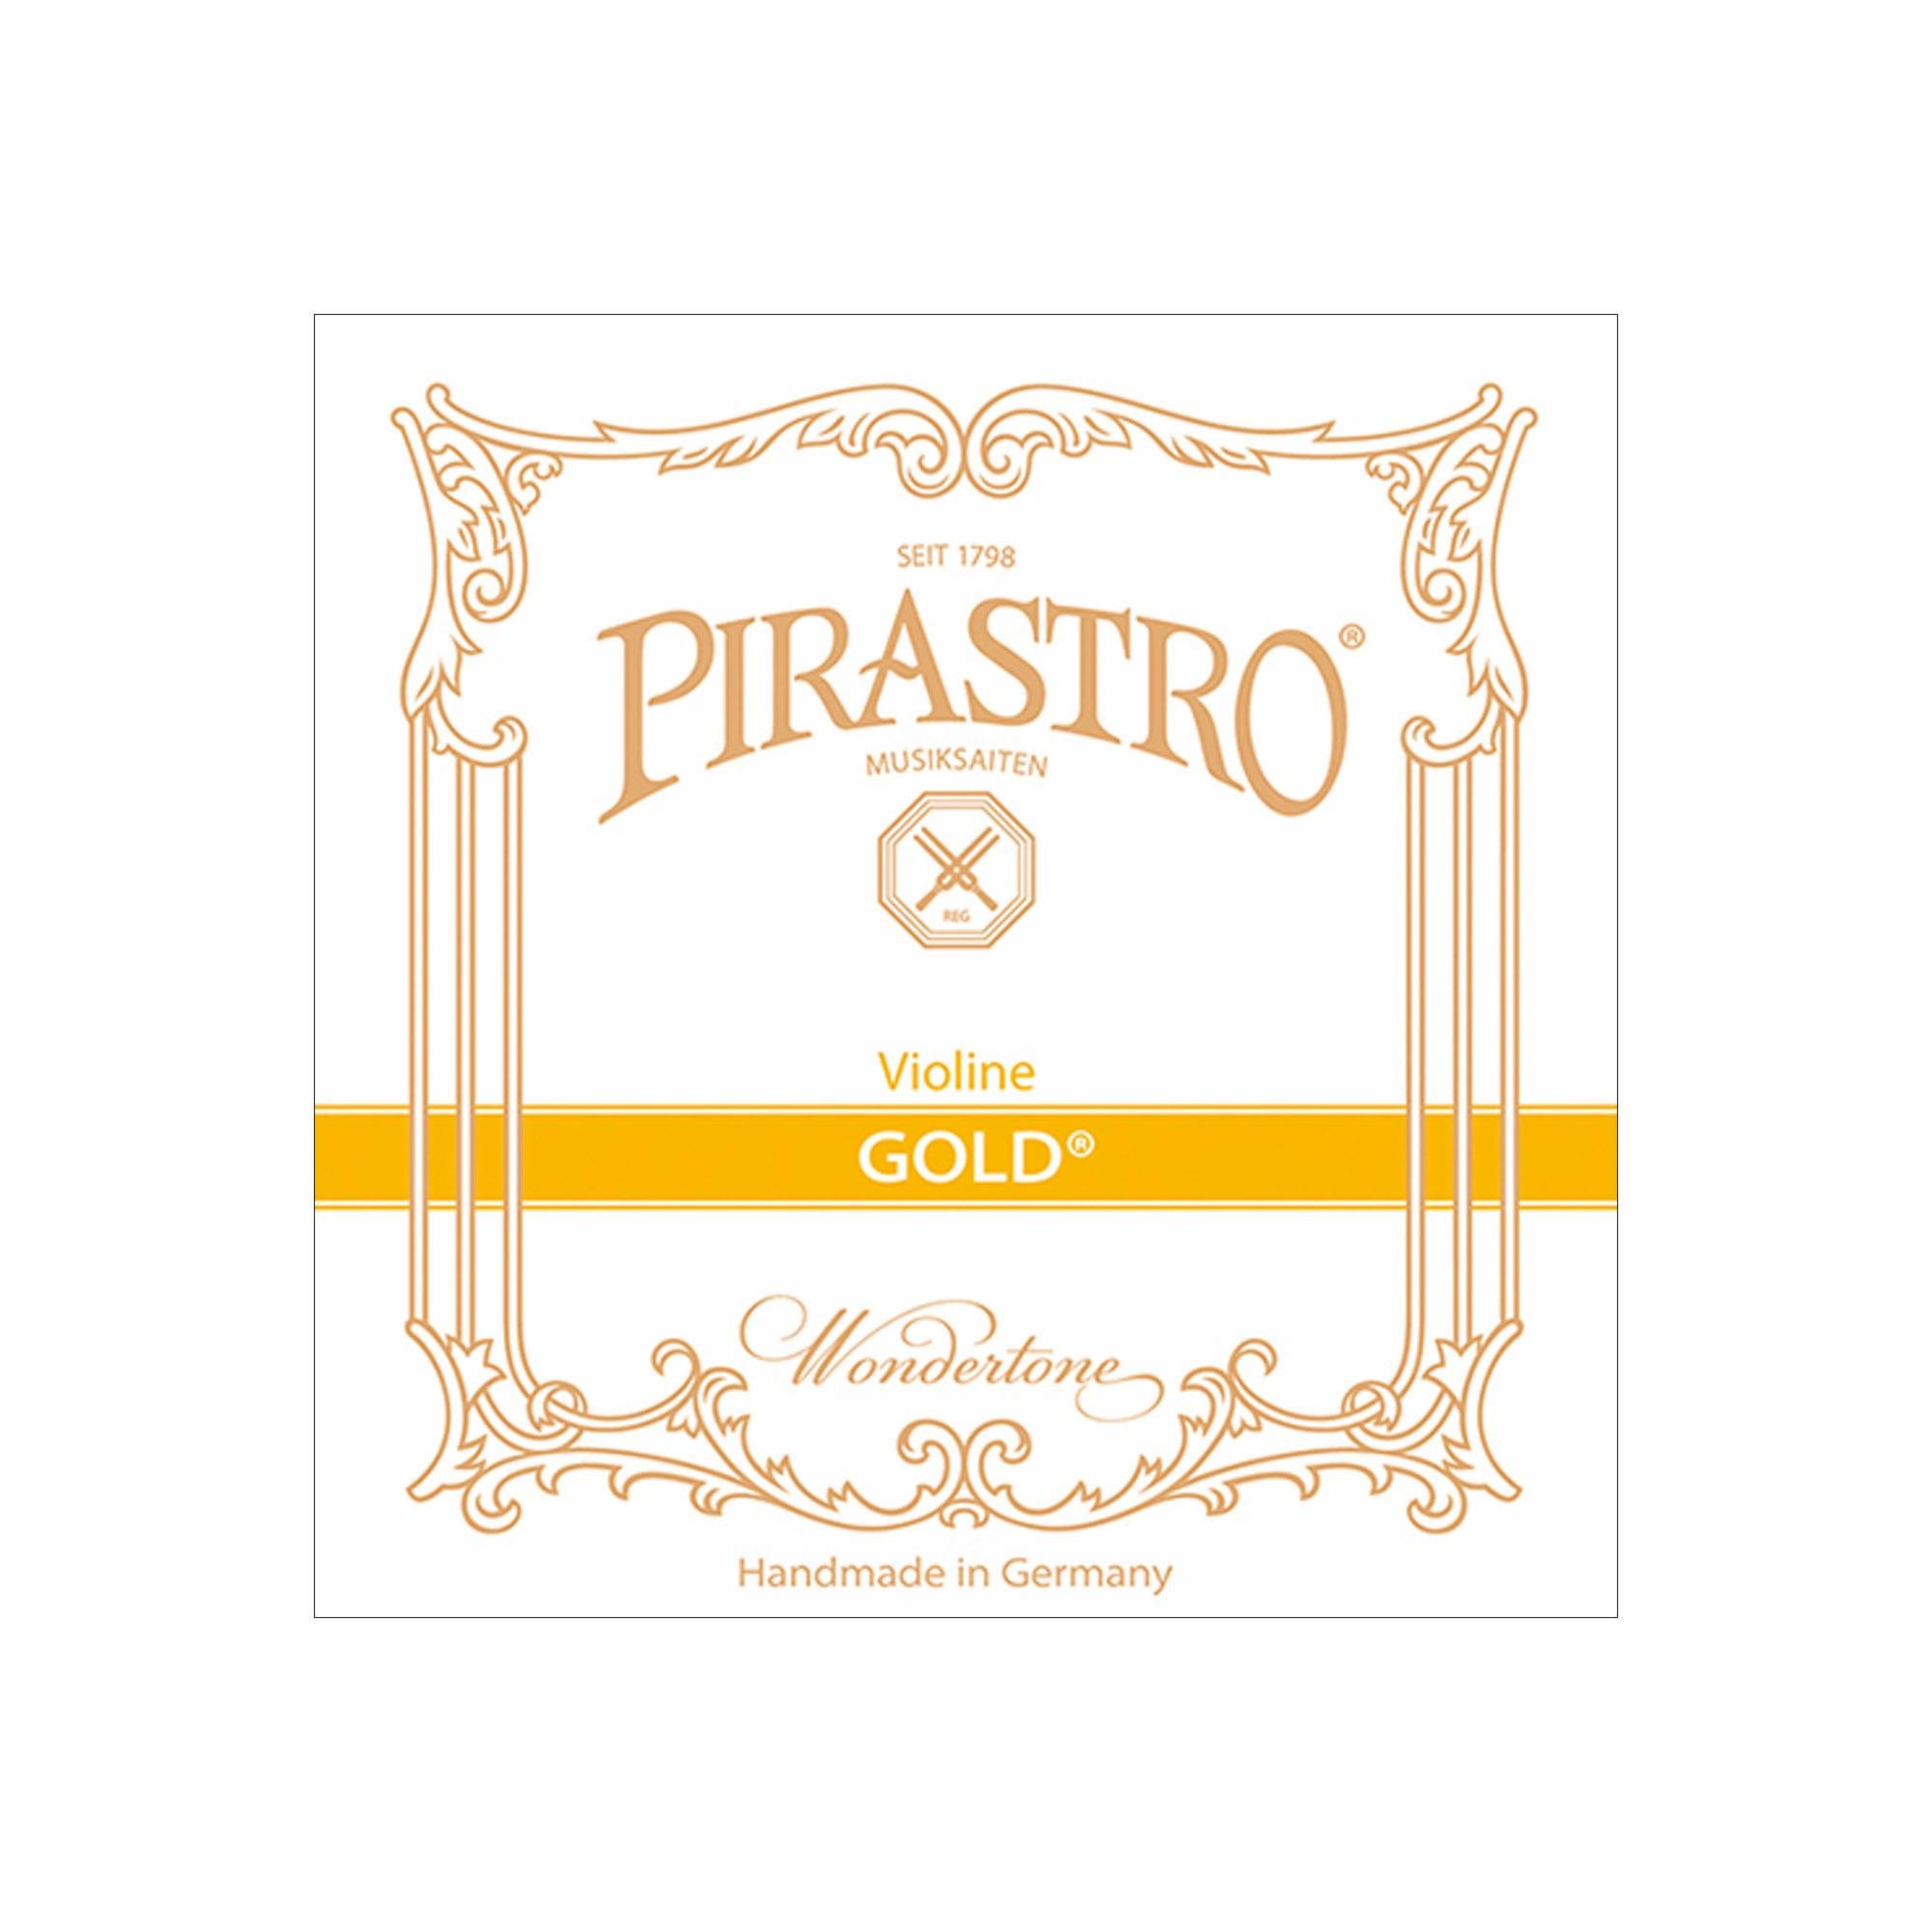 Pirastro Gold Label E String in action